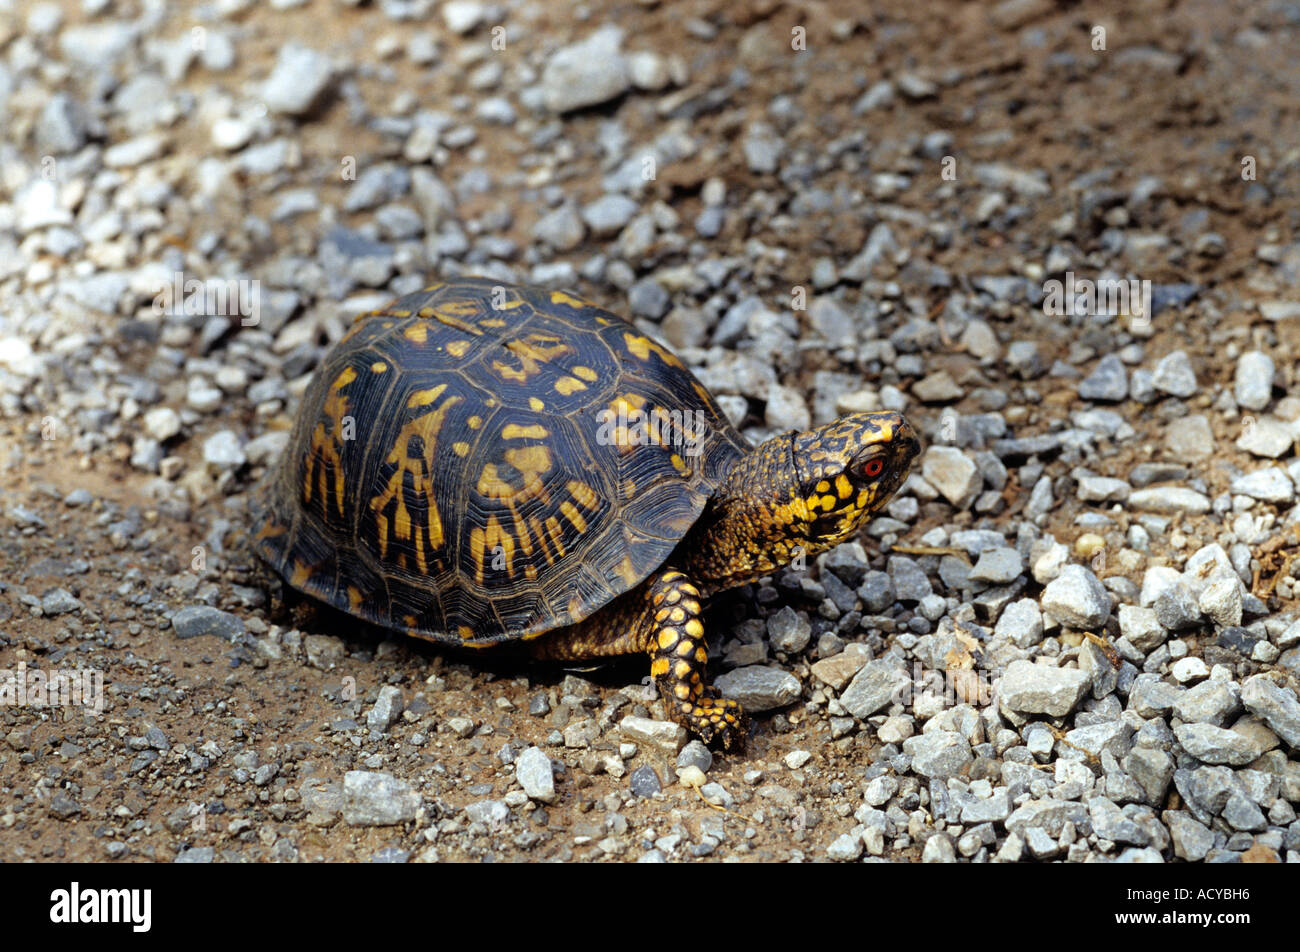 A male ornate box turtle. Stock Photo